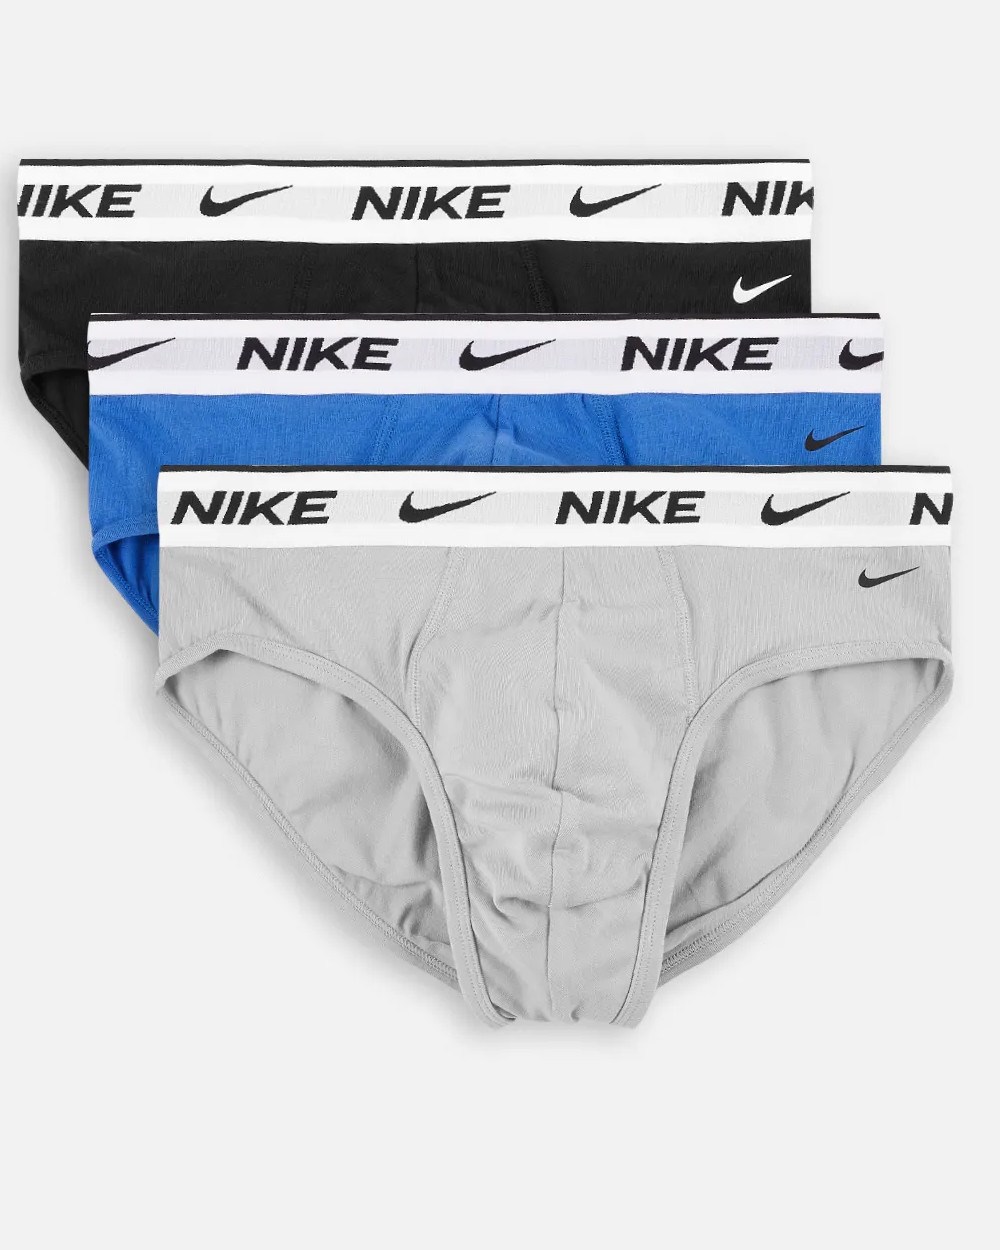  Intimo slip mutante UOMO Nike Underwear BRIEF Graphic 3 PACK Slip F8G cotone